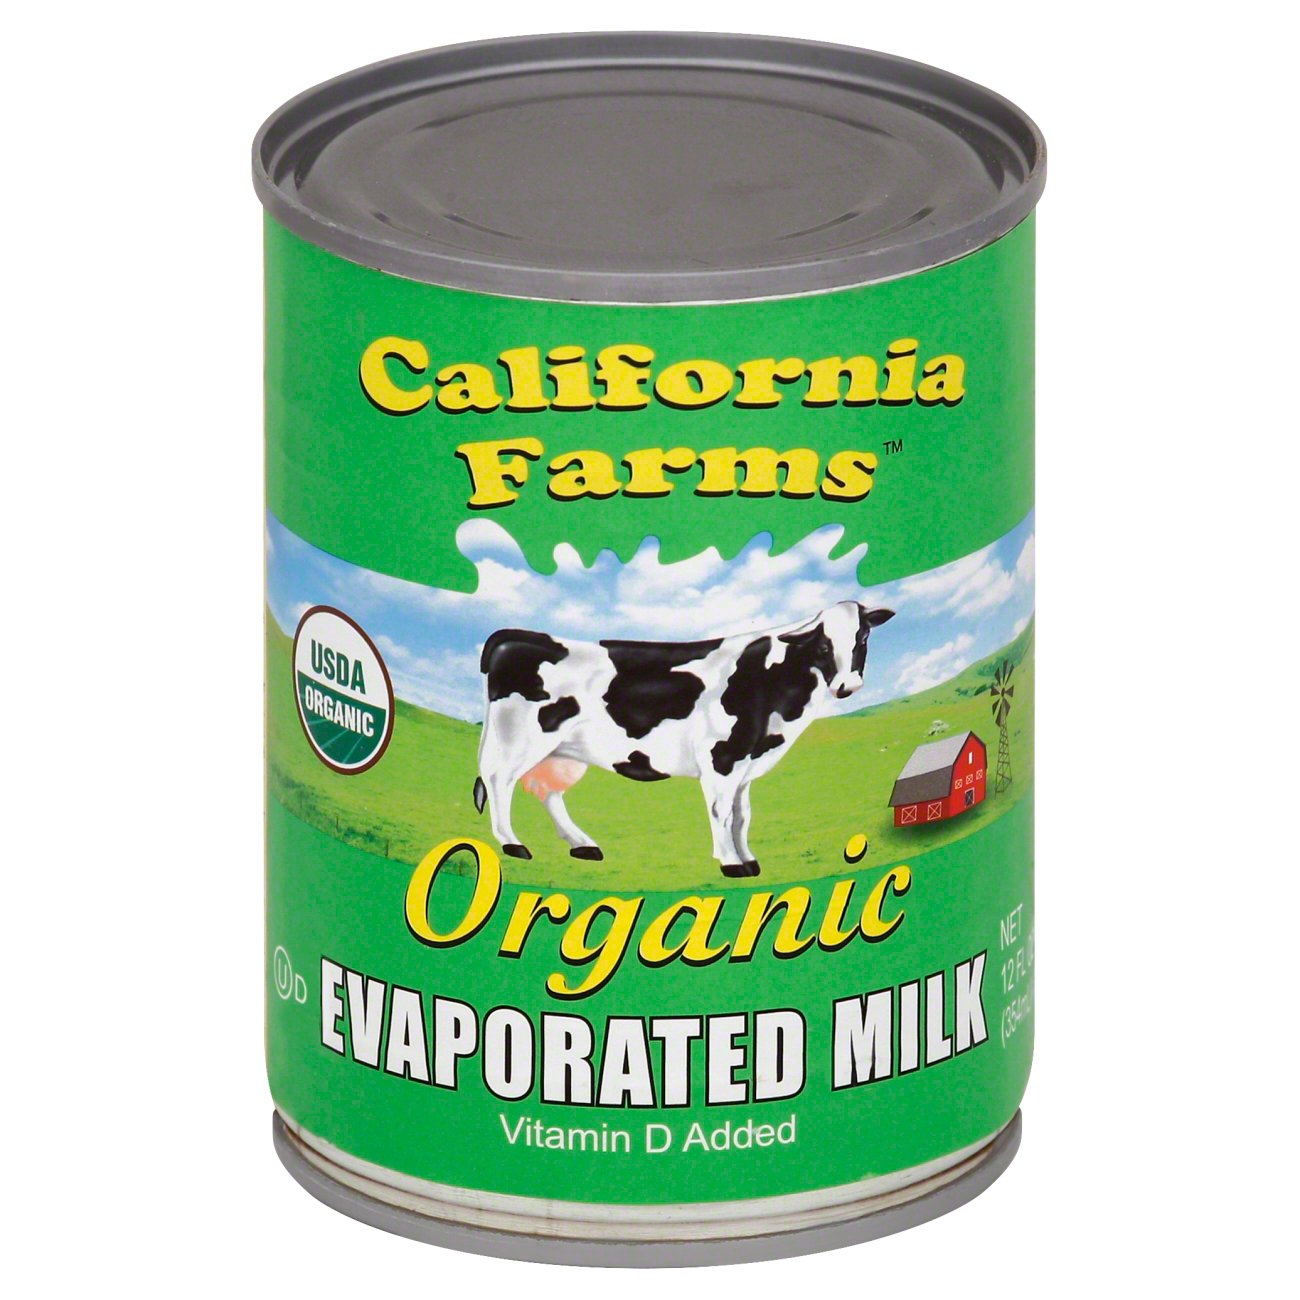 California Farms Organic Evaporated Milk - Shop Evaporated Milk at H-E-B